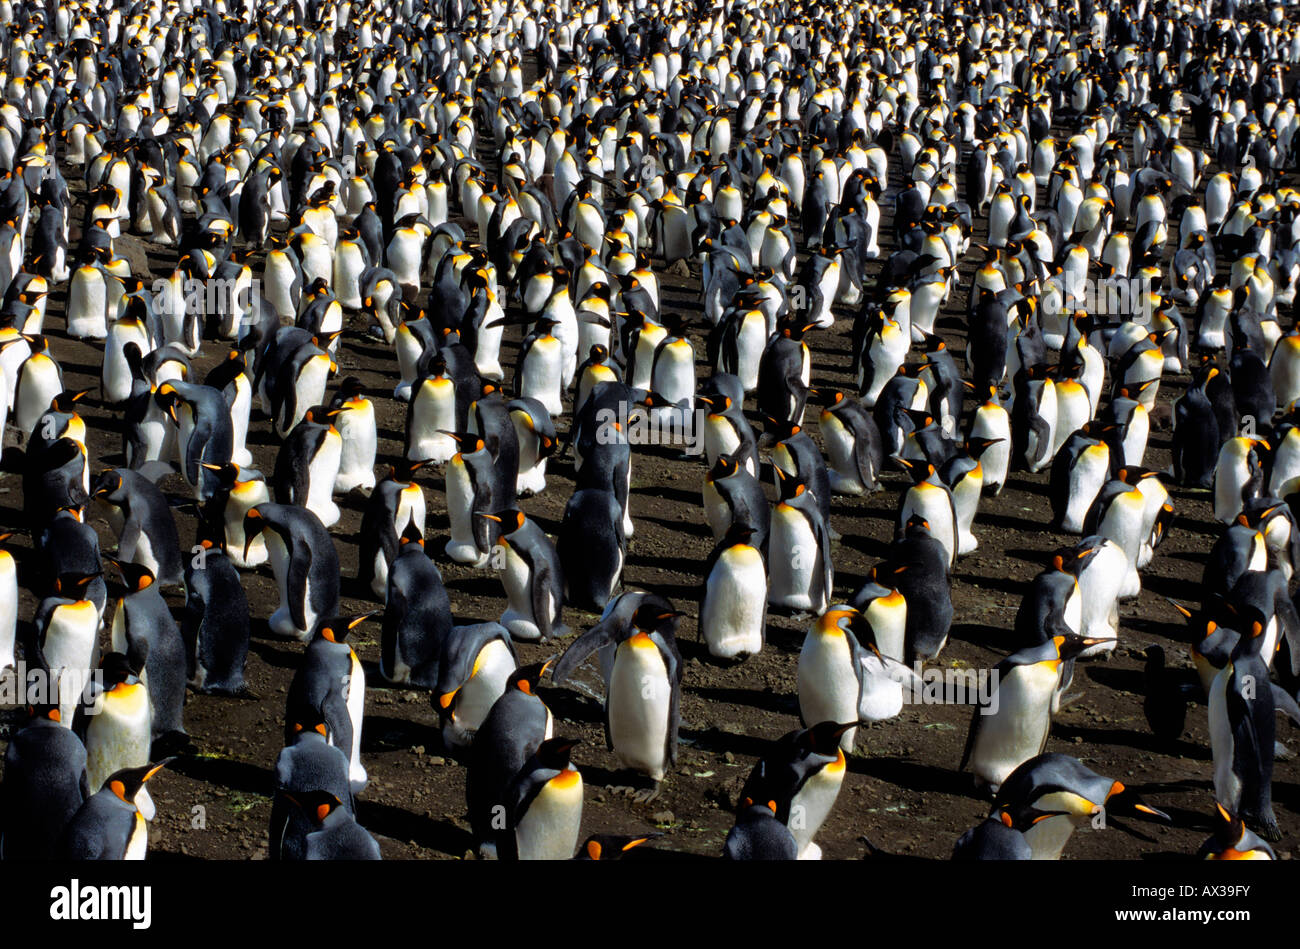 Manchot royal Koenigspinguin re Penguin Aptenodytes patagonicus colonia Antartico animali acquatici Antarktis Aves uccelli flightle Foto Stock